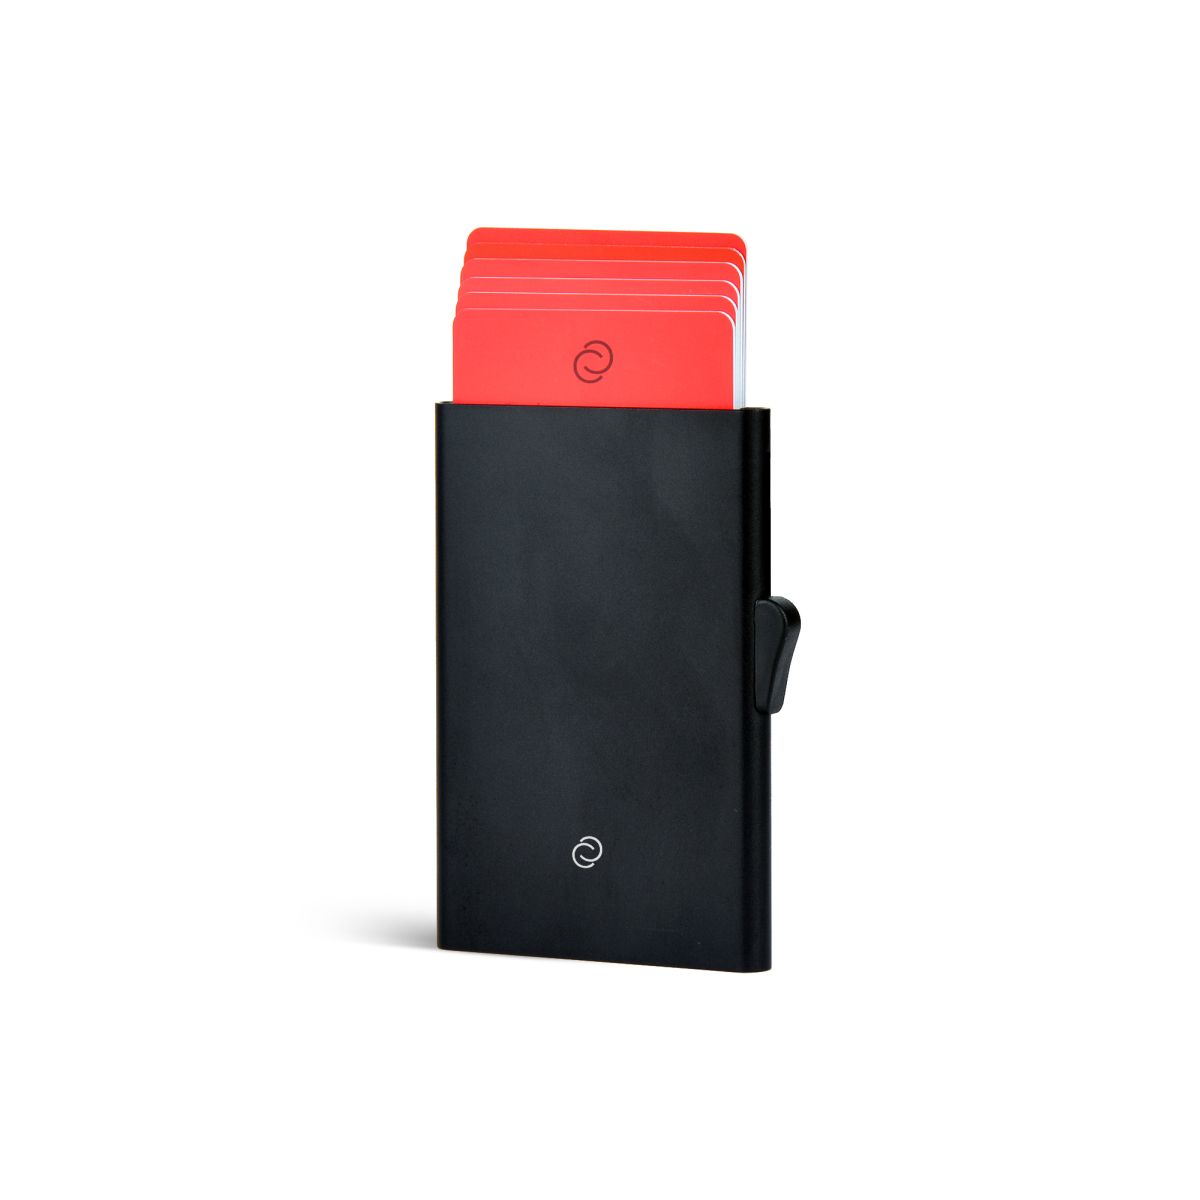 C-Secure Slim Aluminum Card Holder - Black